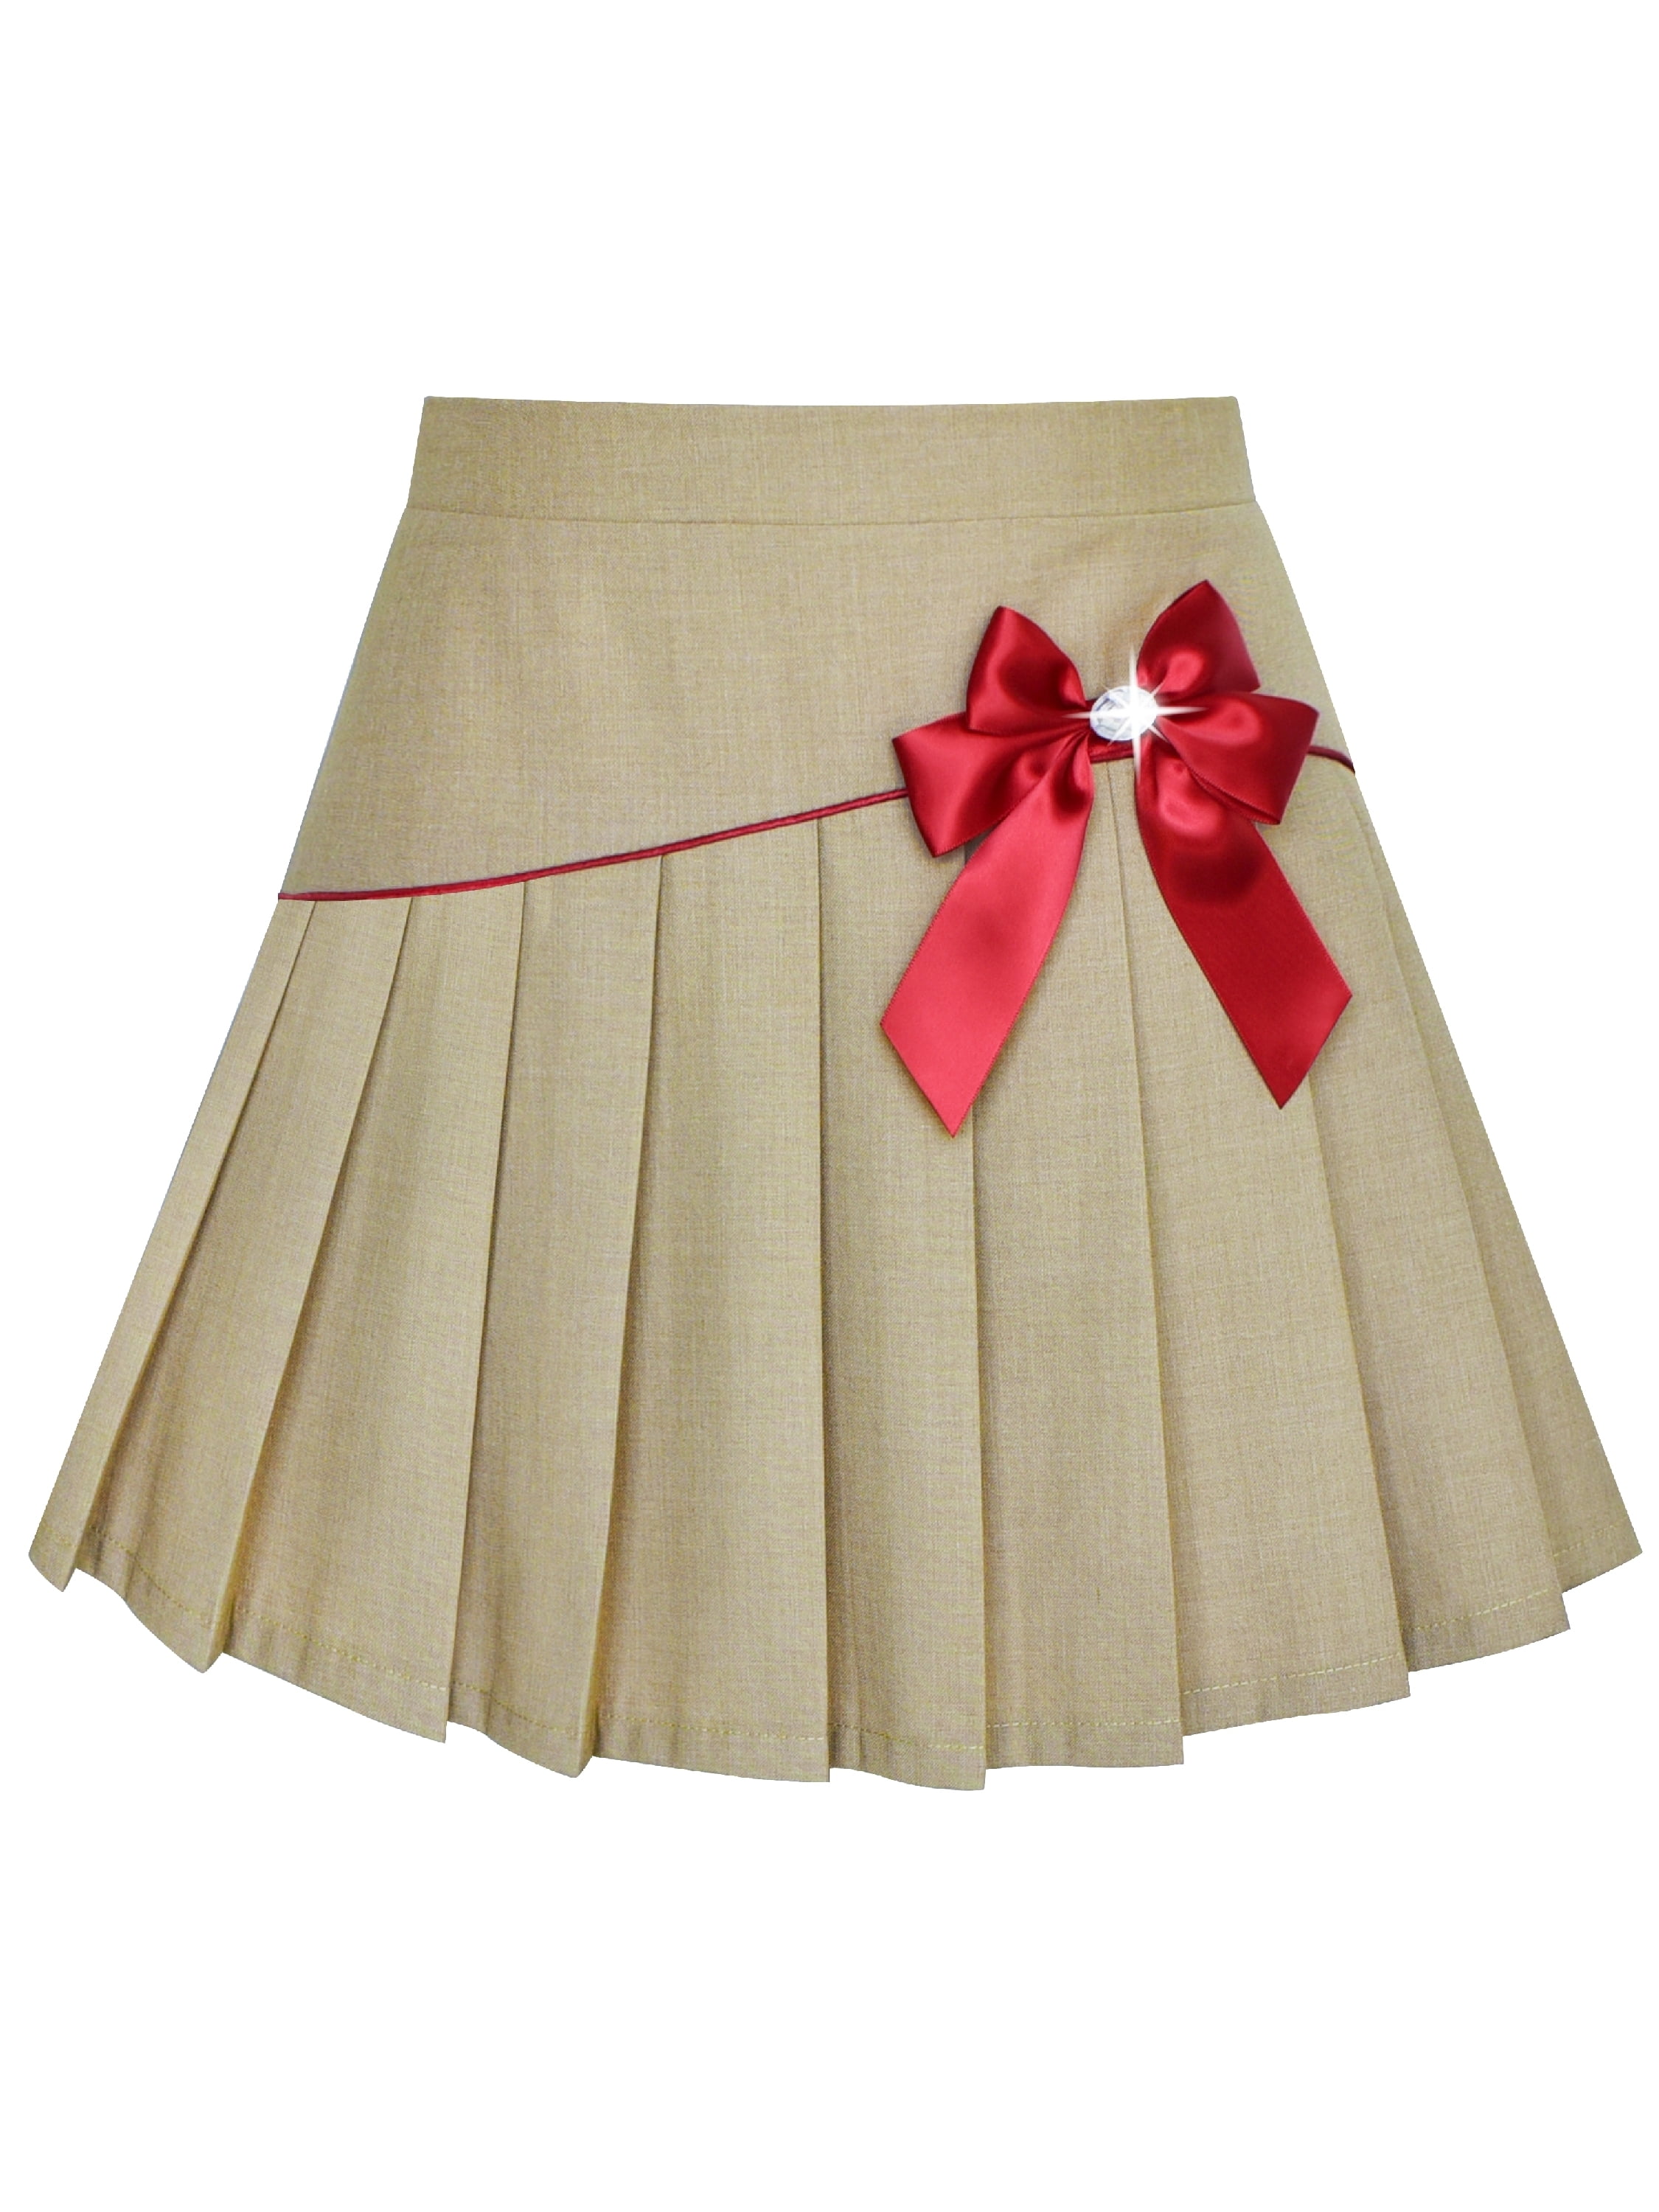 Sunny Fashion Girls Skirt Back School Uniform Red Tartan Skirt Age 6-14 Years 